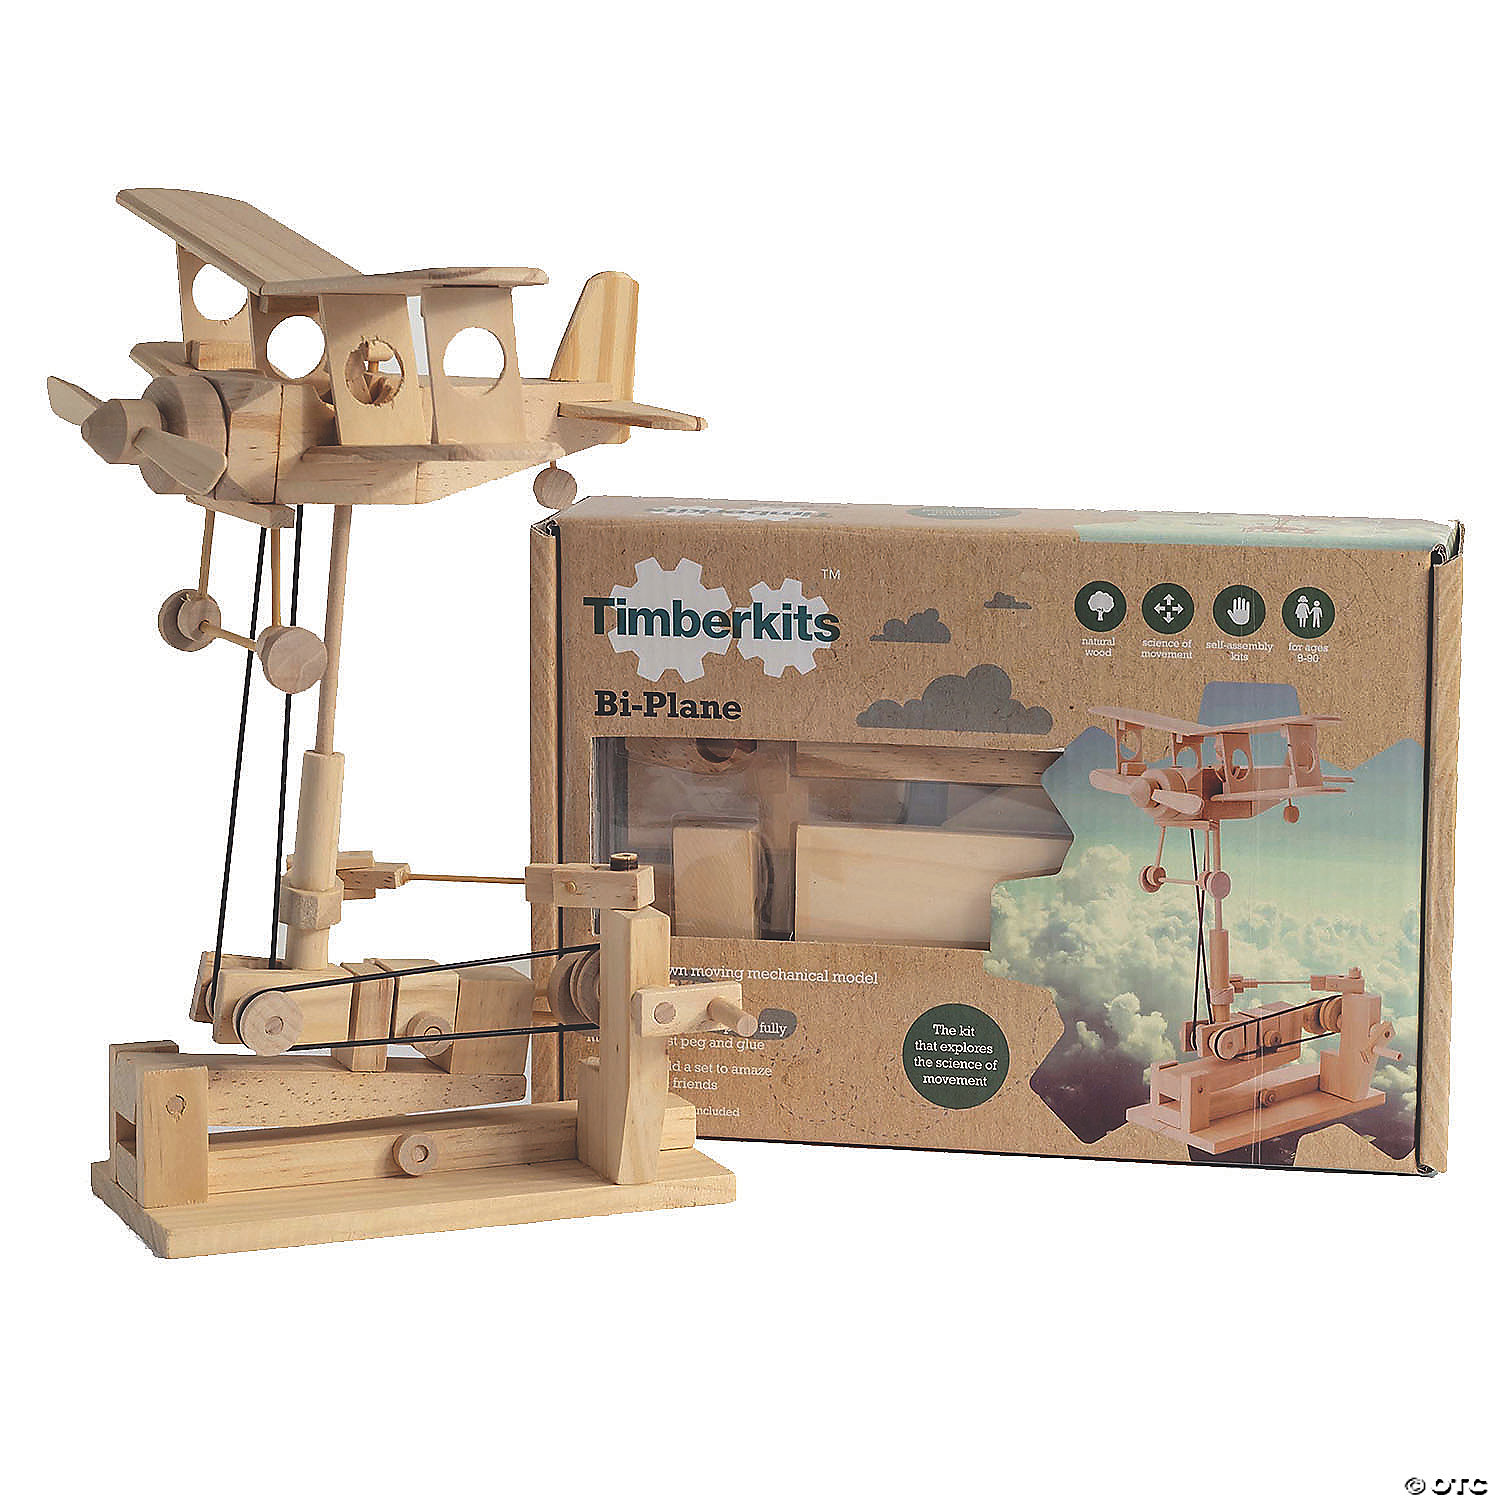 Elenco Timberkits Bi-Plane Mechanical Wooden Model Kit 